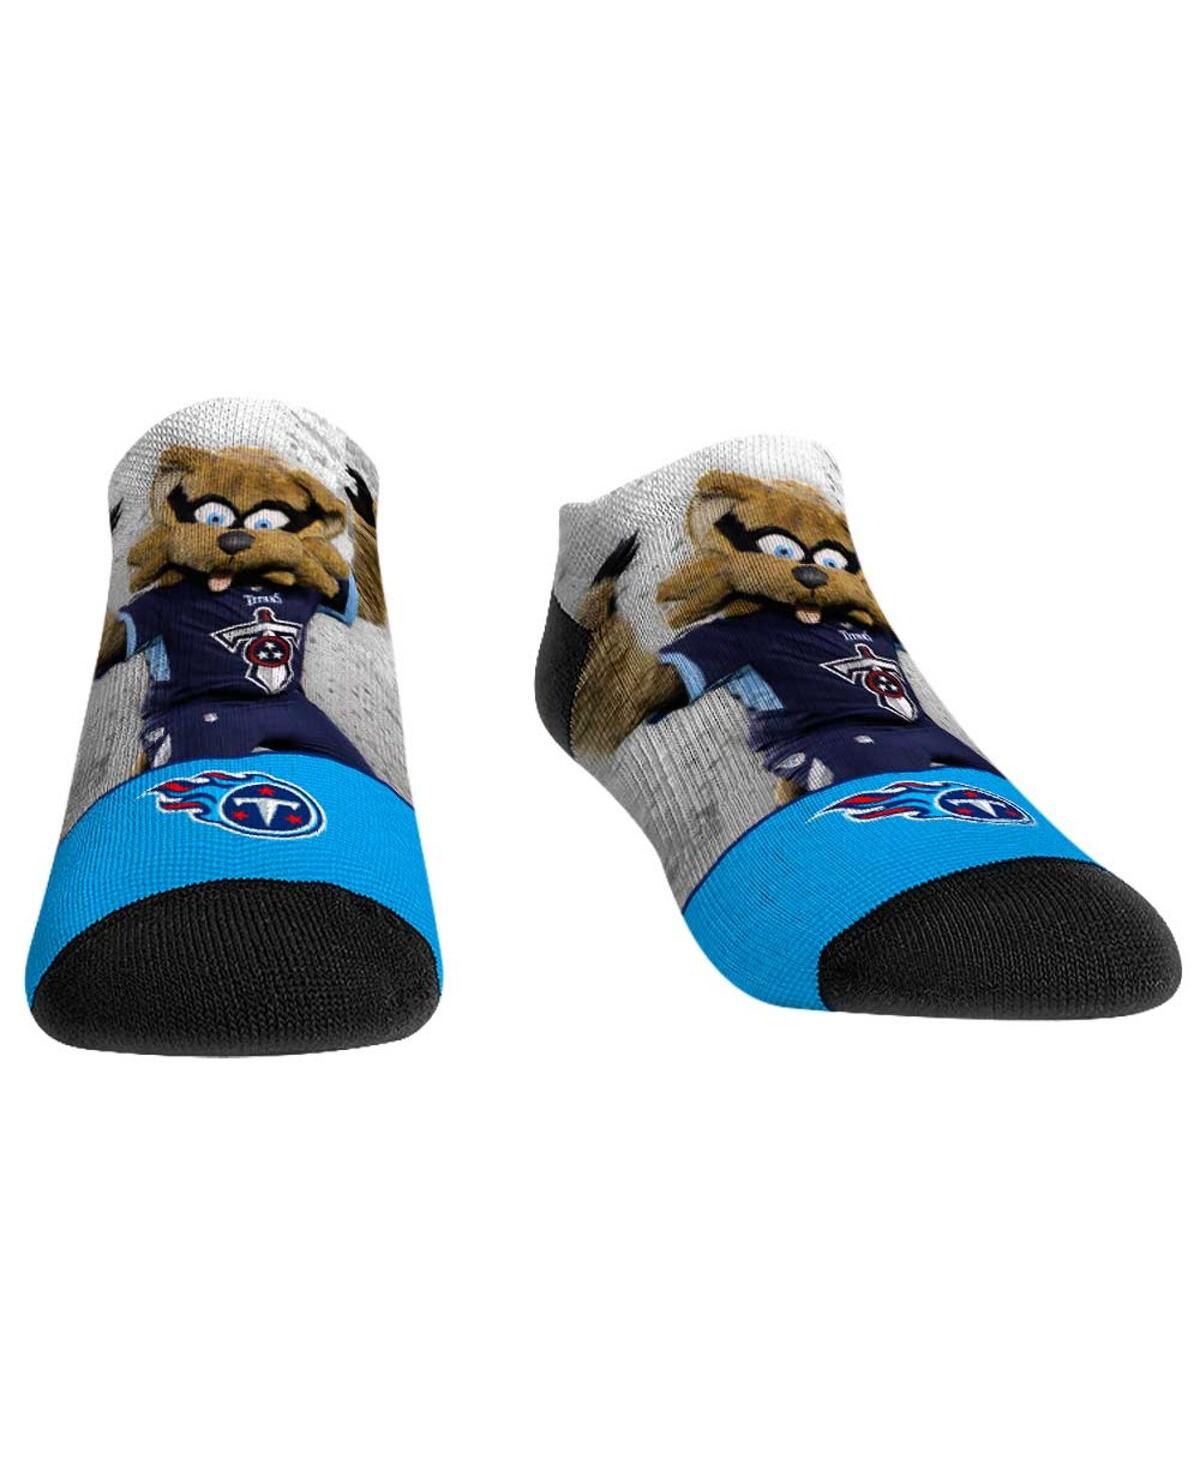 Men's and Women's Rock 'Em Socks Tennessee Titans Mascot Walkout Low Cut Socks - Multi